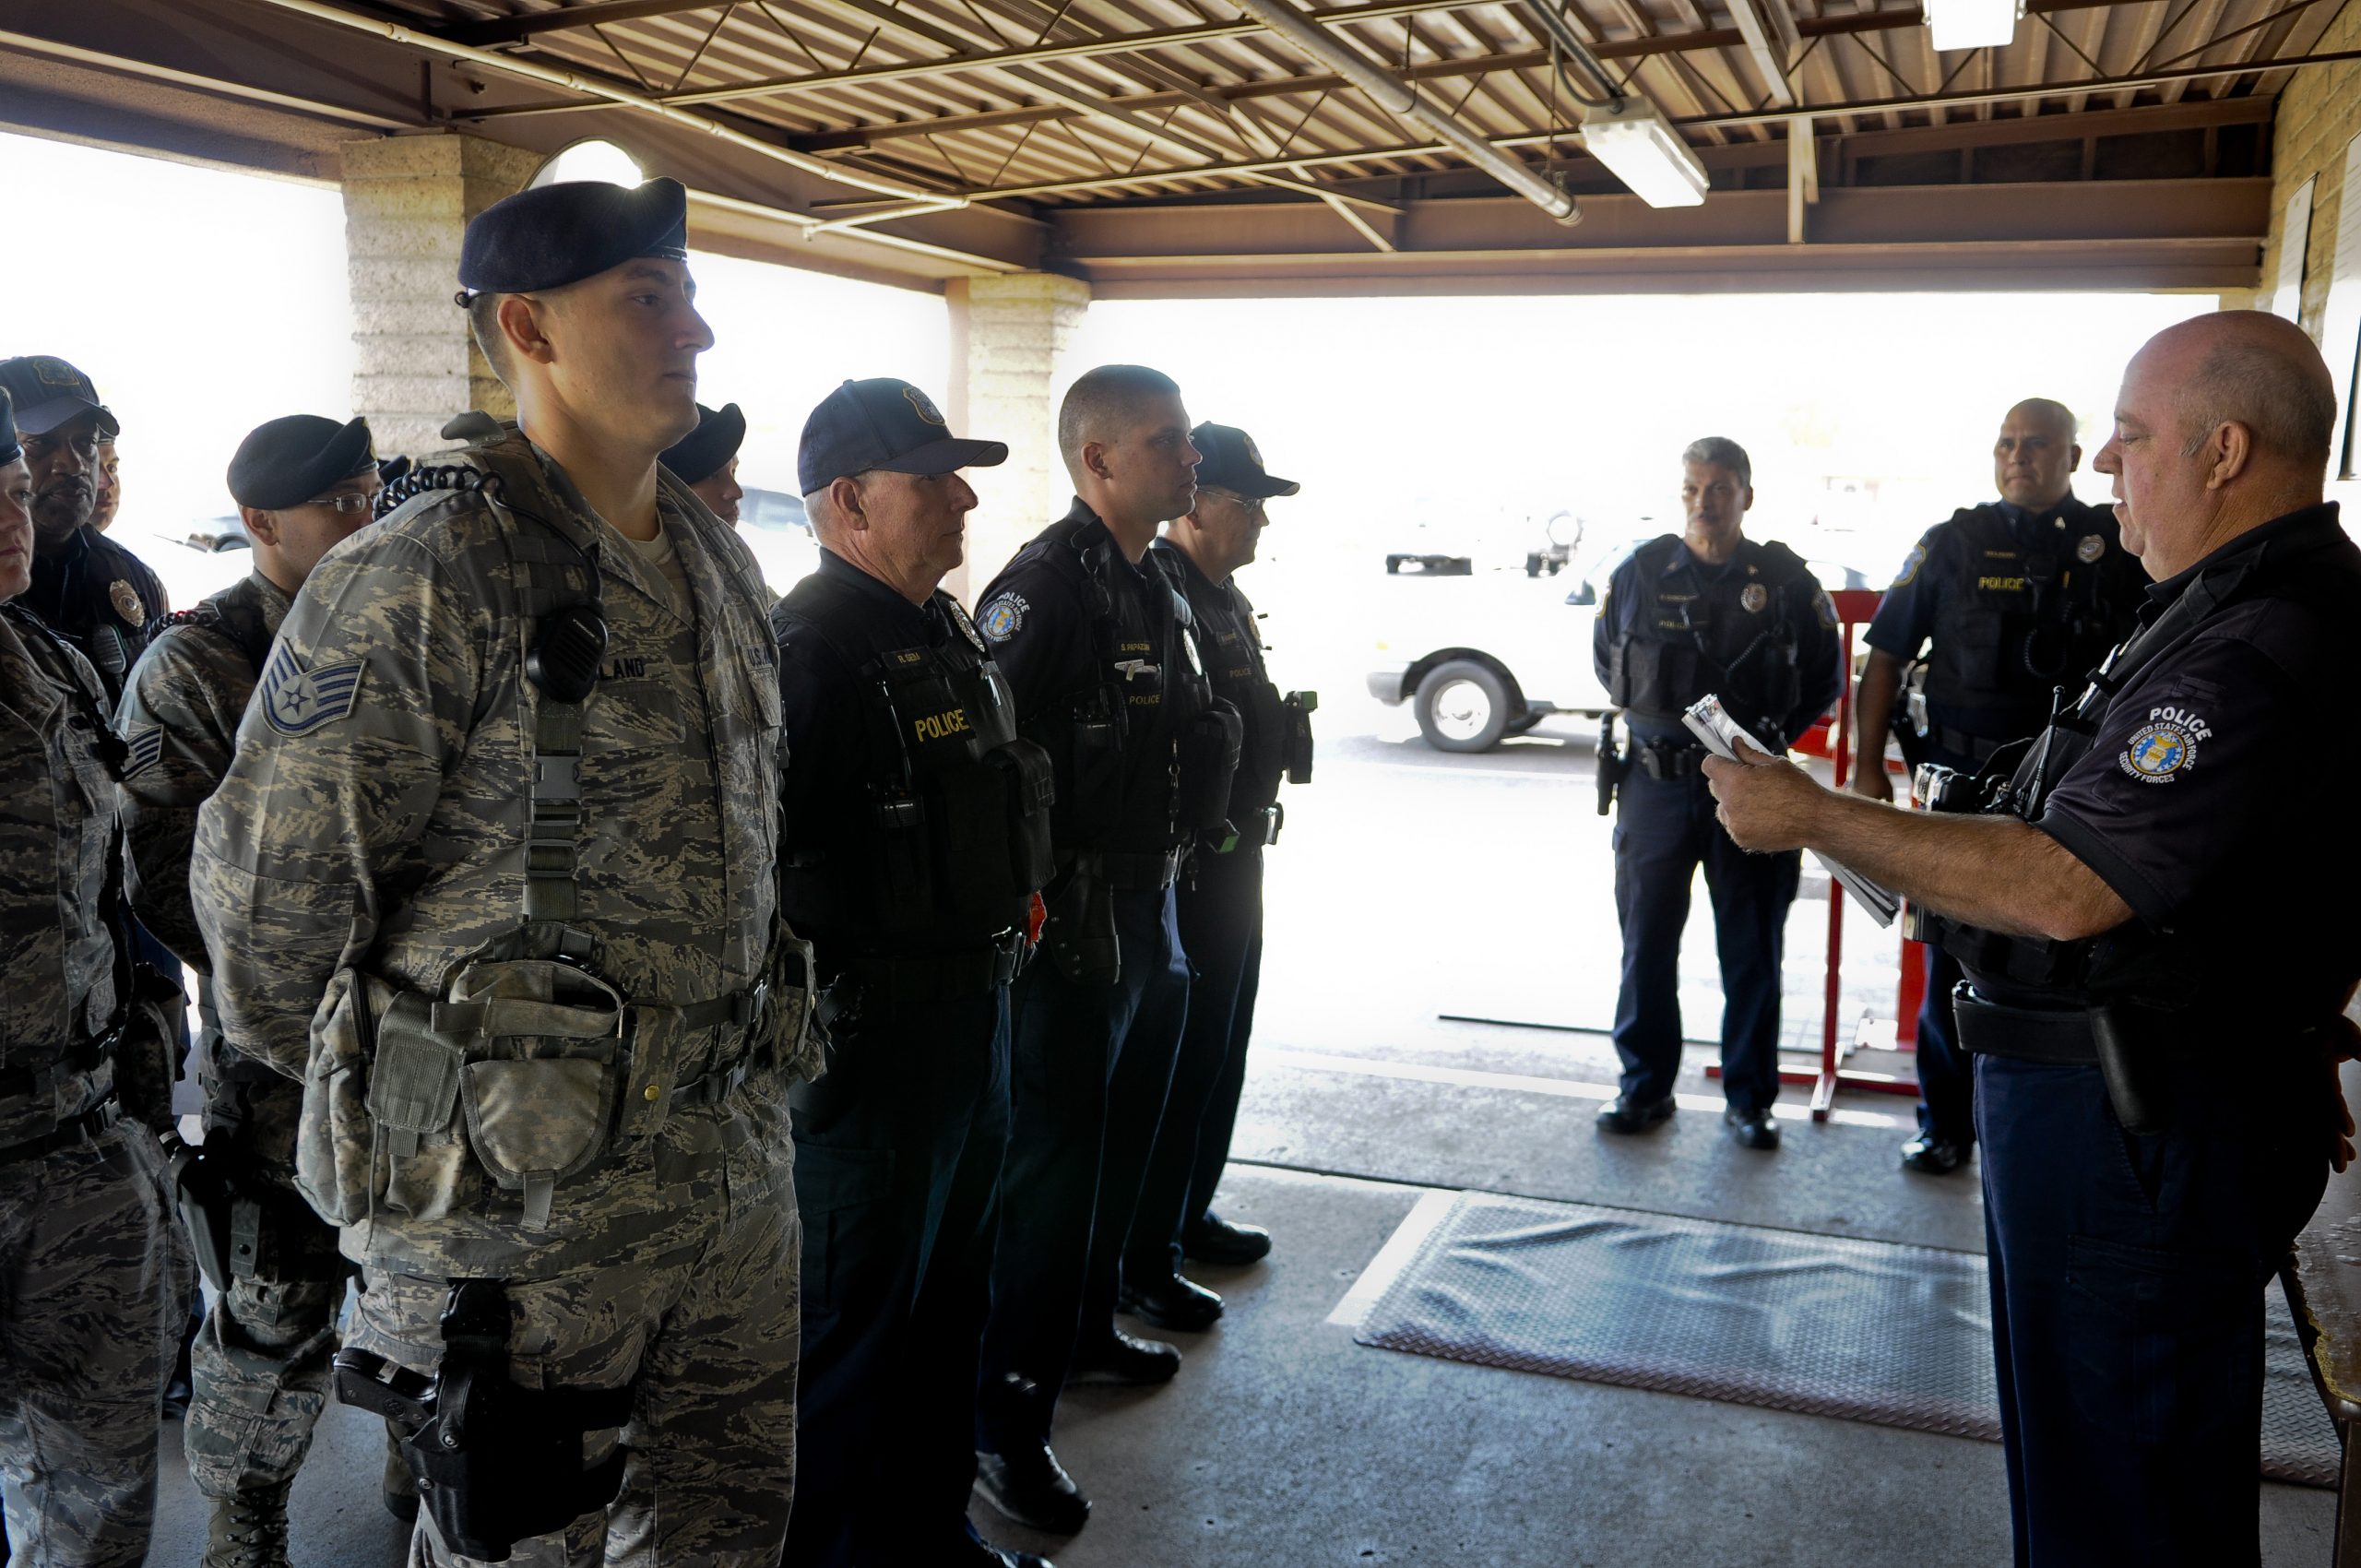 civilian police enter new territory at luke luke air force base scaled